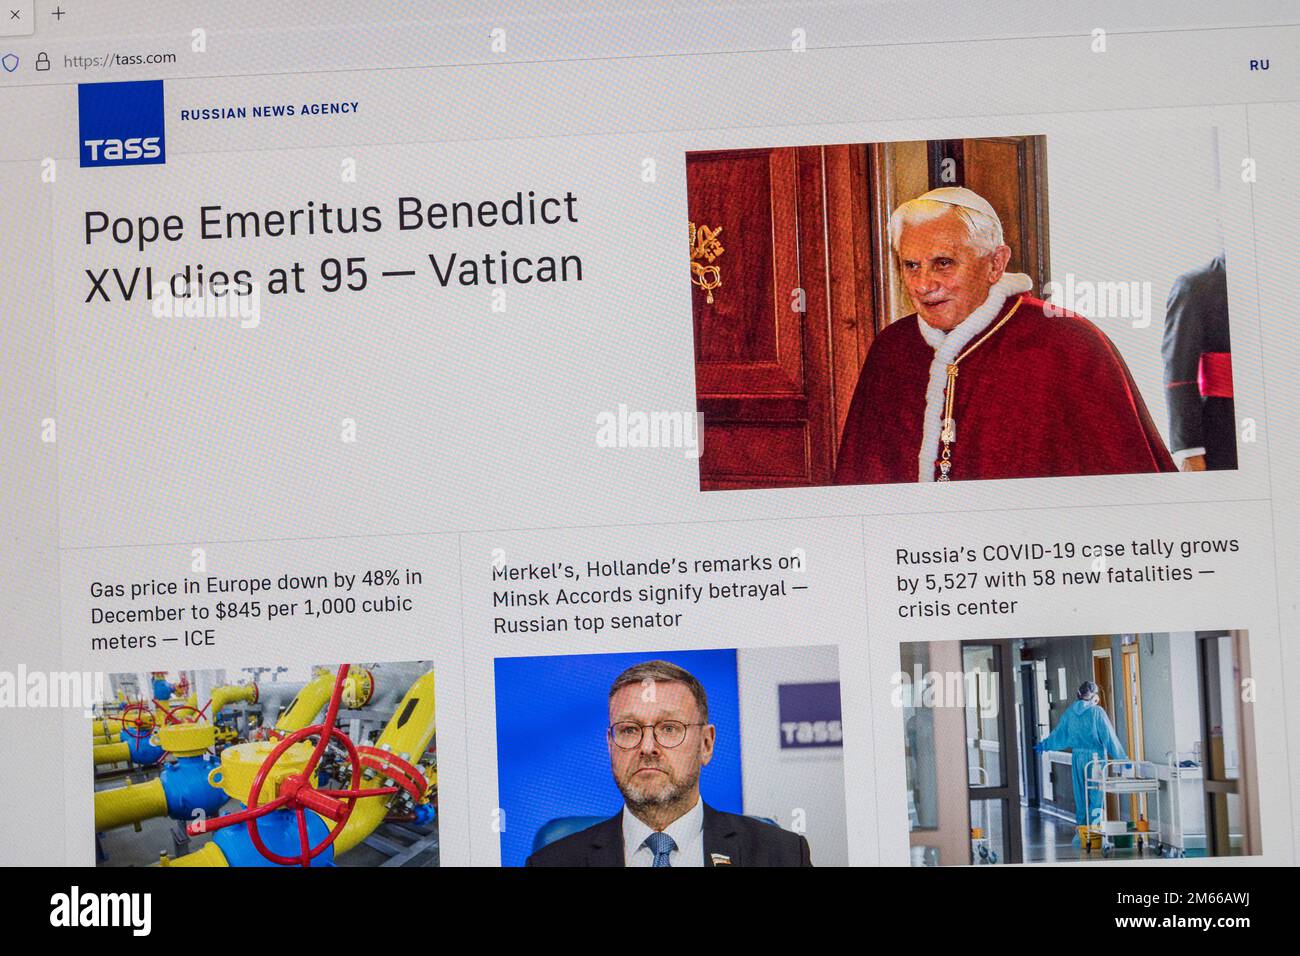 Breaking news reaction on TASS website to the death of Pope Emeritus Benedict XVI on 31st December 2022. Stock Photo